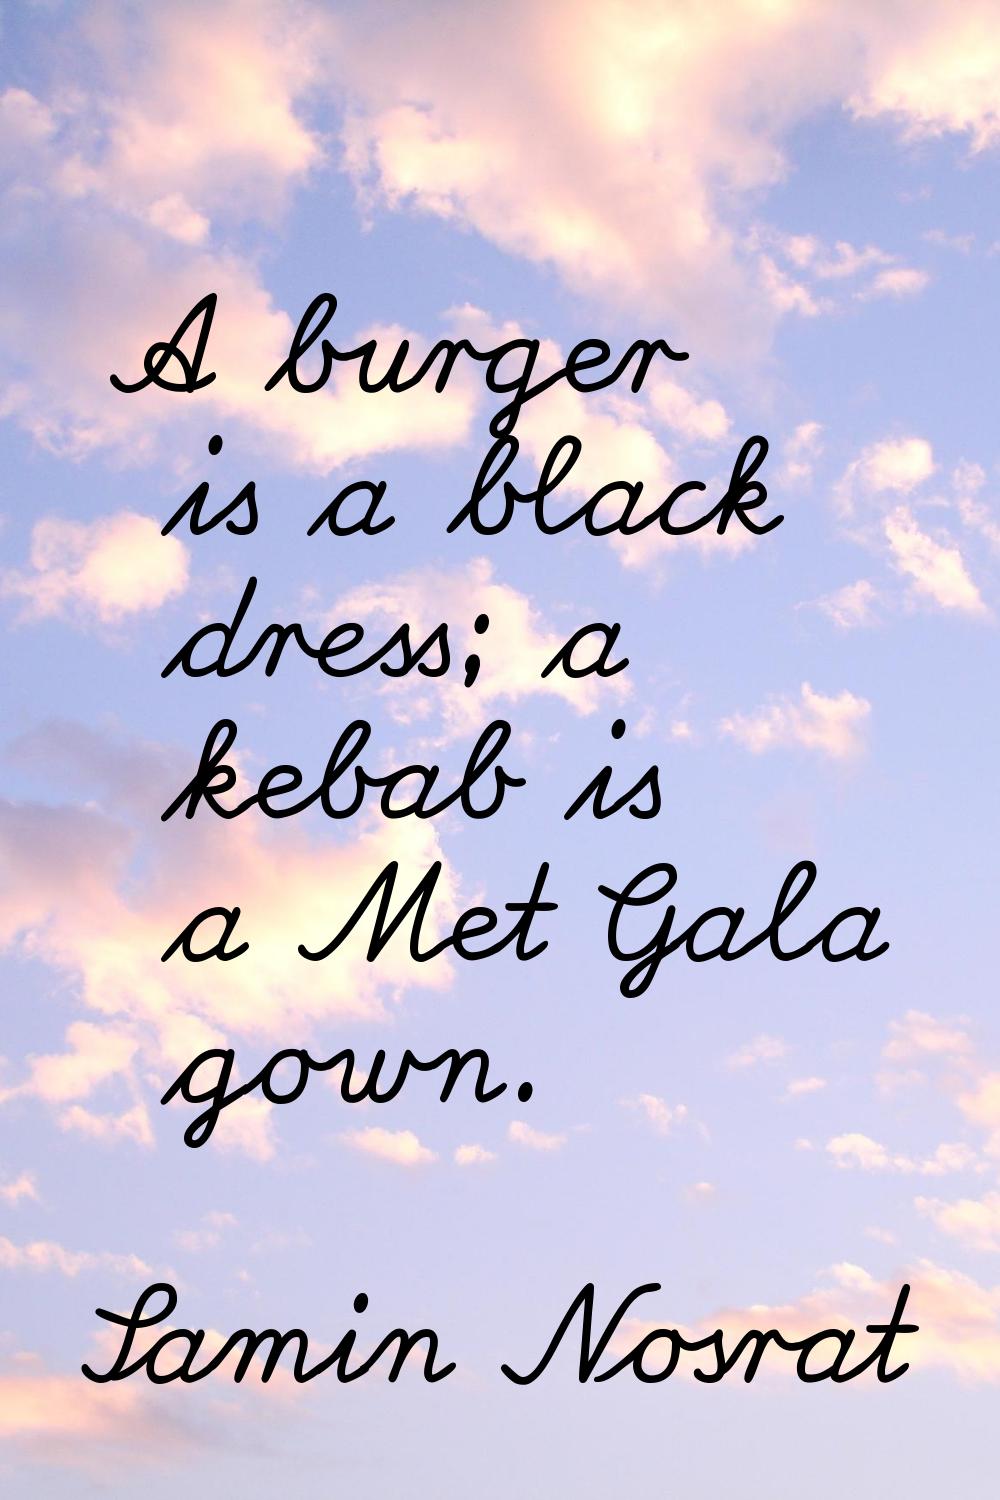 A burger is a black dress; a kebab is a Met Gala gown.